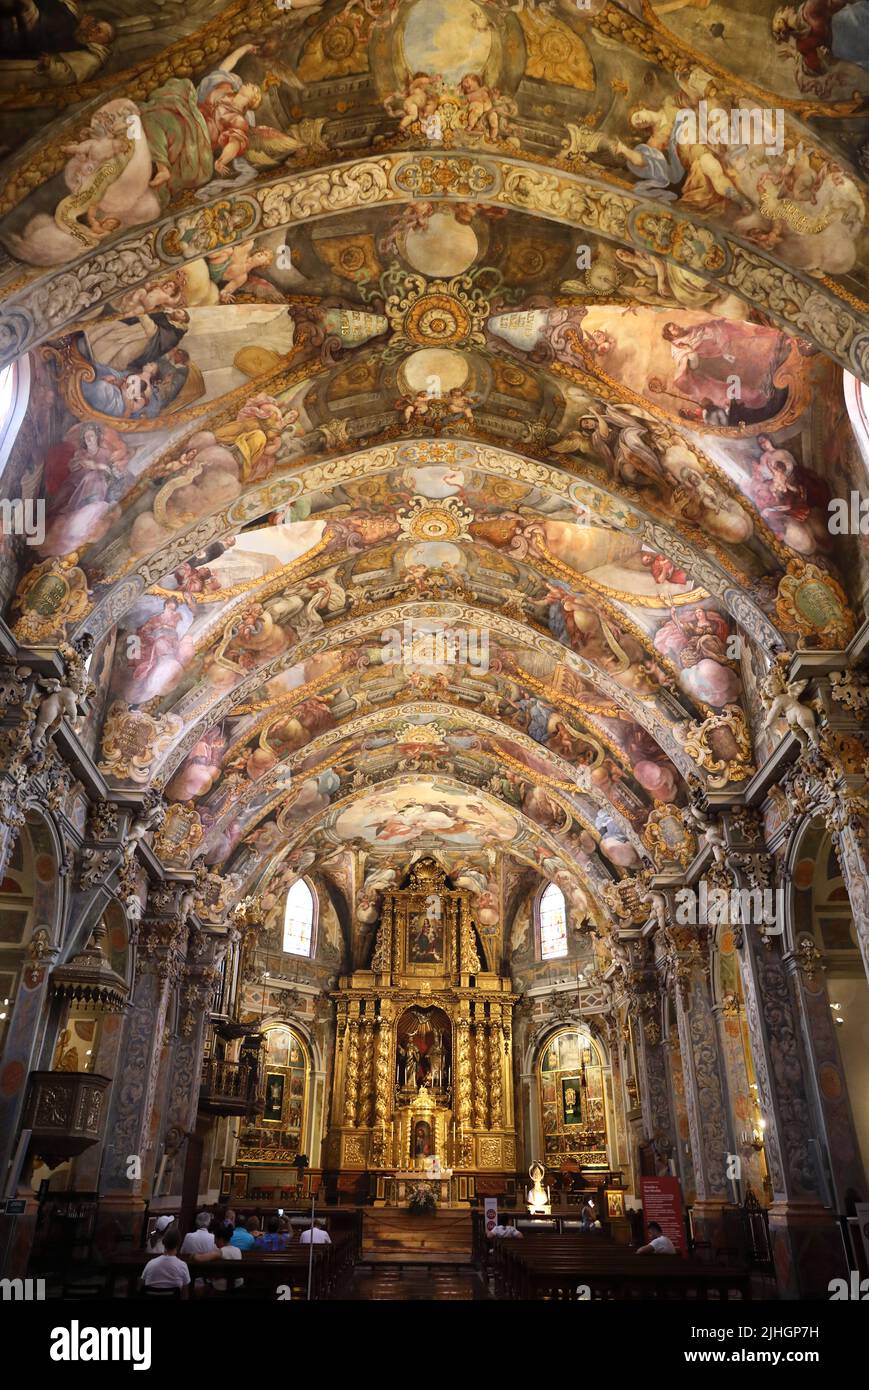 Interior of beautiful San Nicolas de Bari and San Pedro Martir, a Valencian Gothic style RC church, known as the Sistine Chapel of Valenca, in Spain Stock Photo